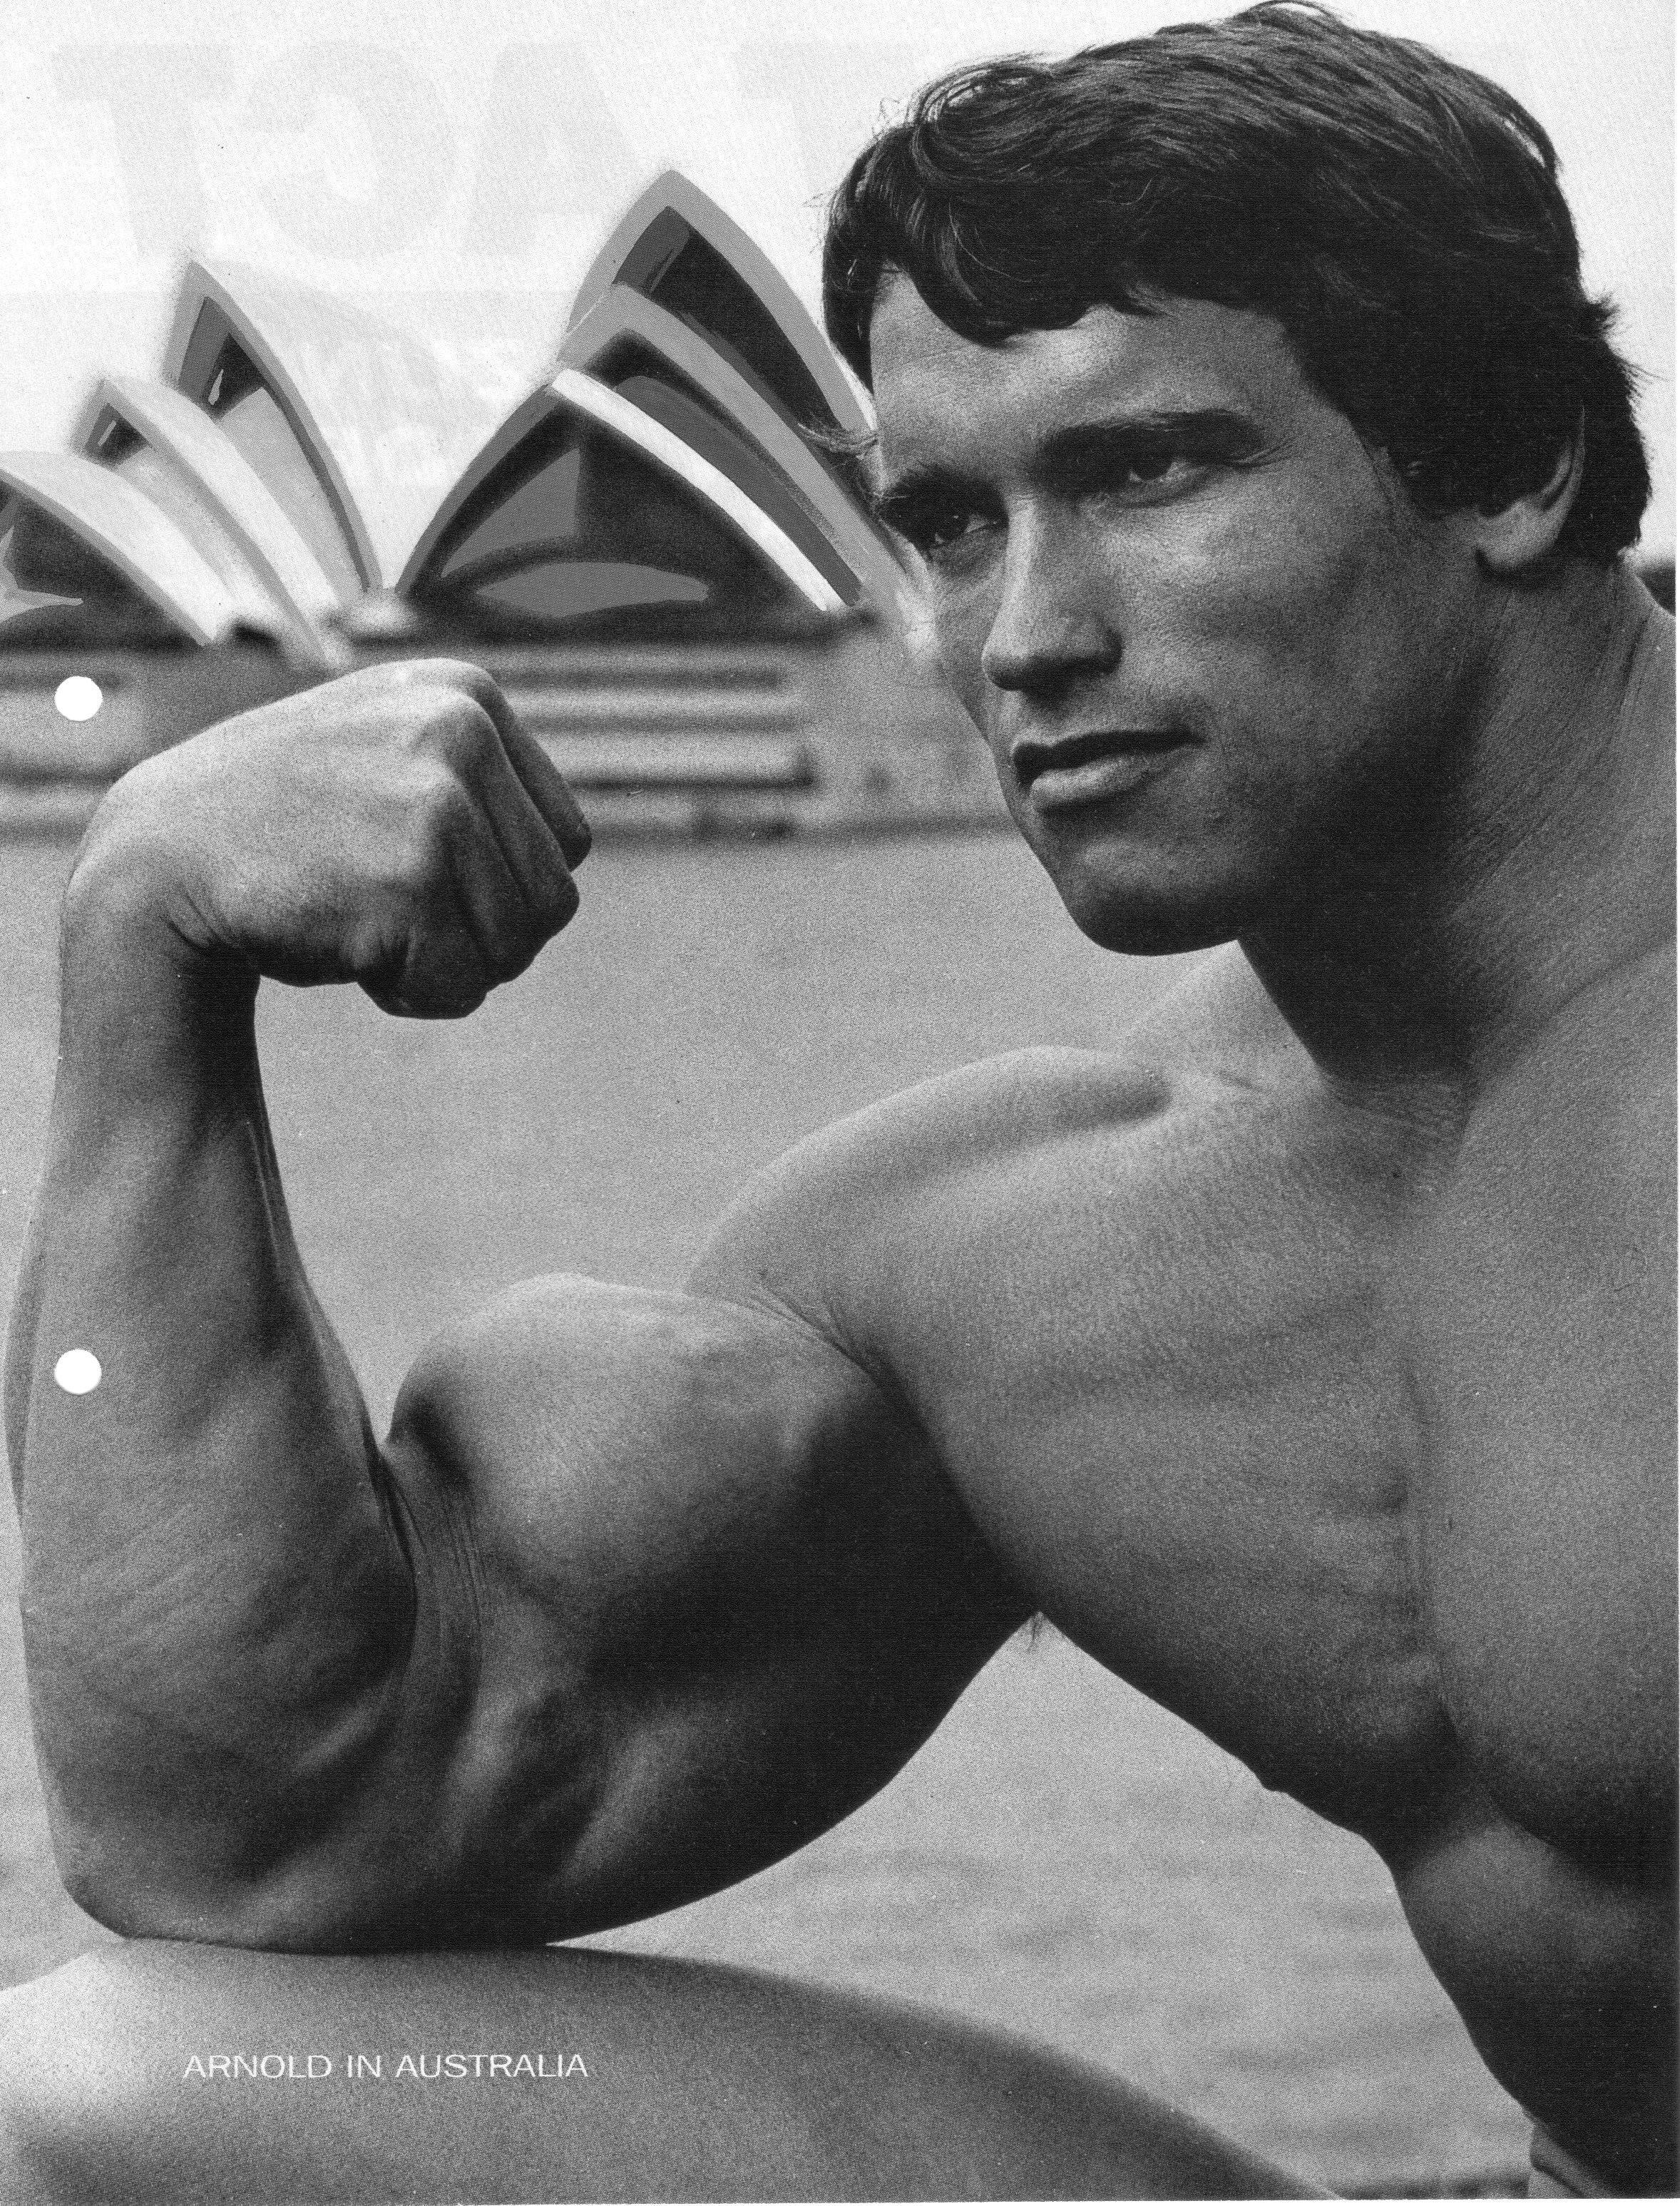 HD wallpaper, Arnold Schwarzenegger Bodybuilding Bodybuilder Barbell Dumbbells Gyms Exercising